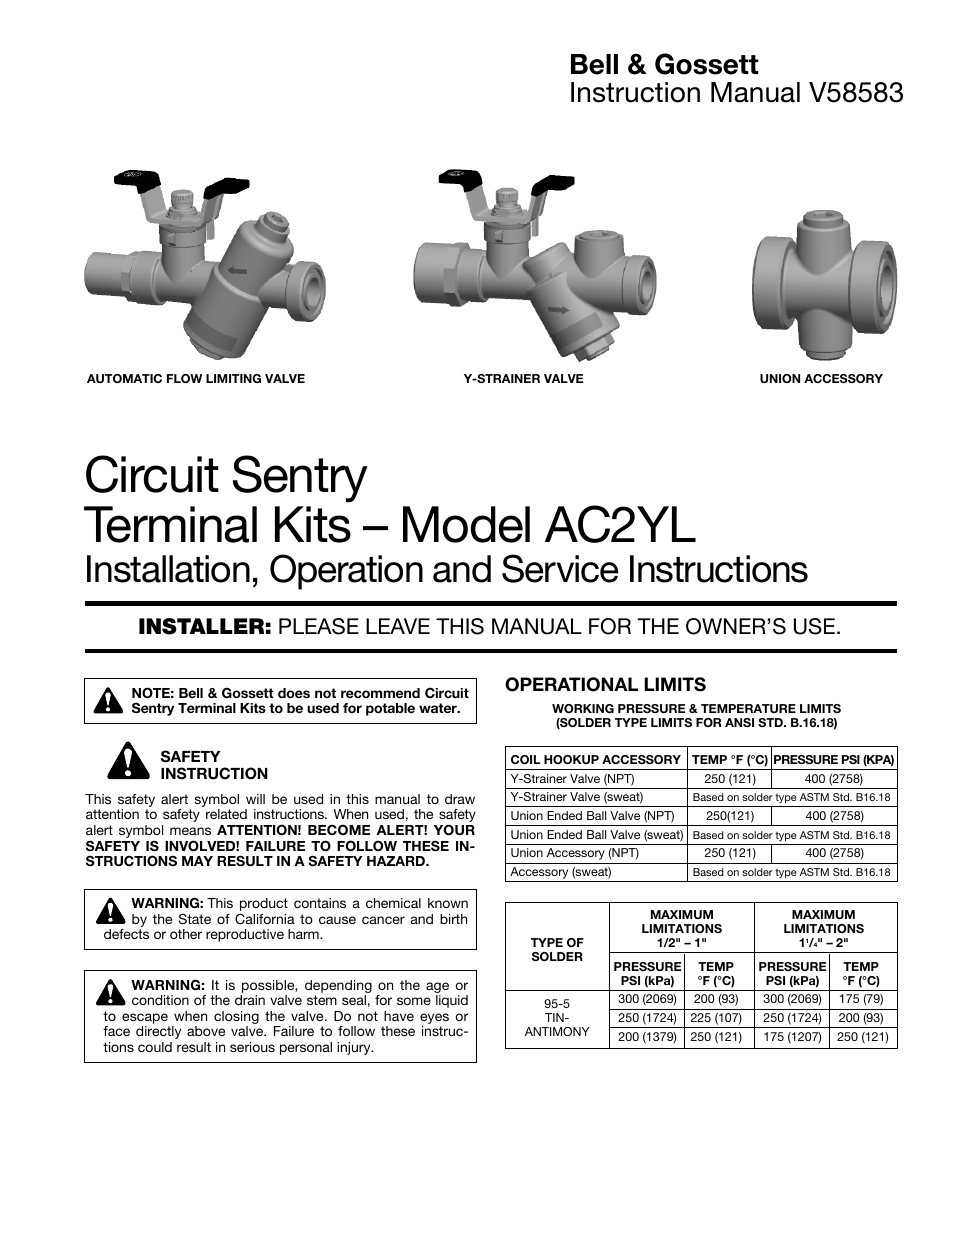 V58583 Circuit Sentry Terminal Kits – AC2YL